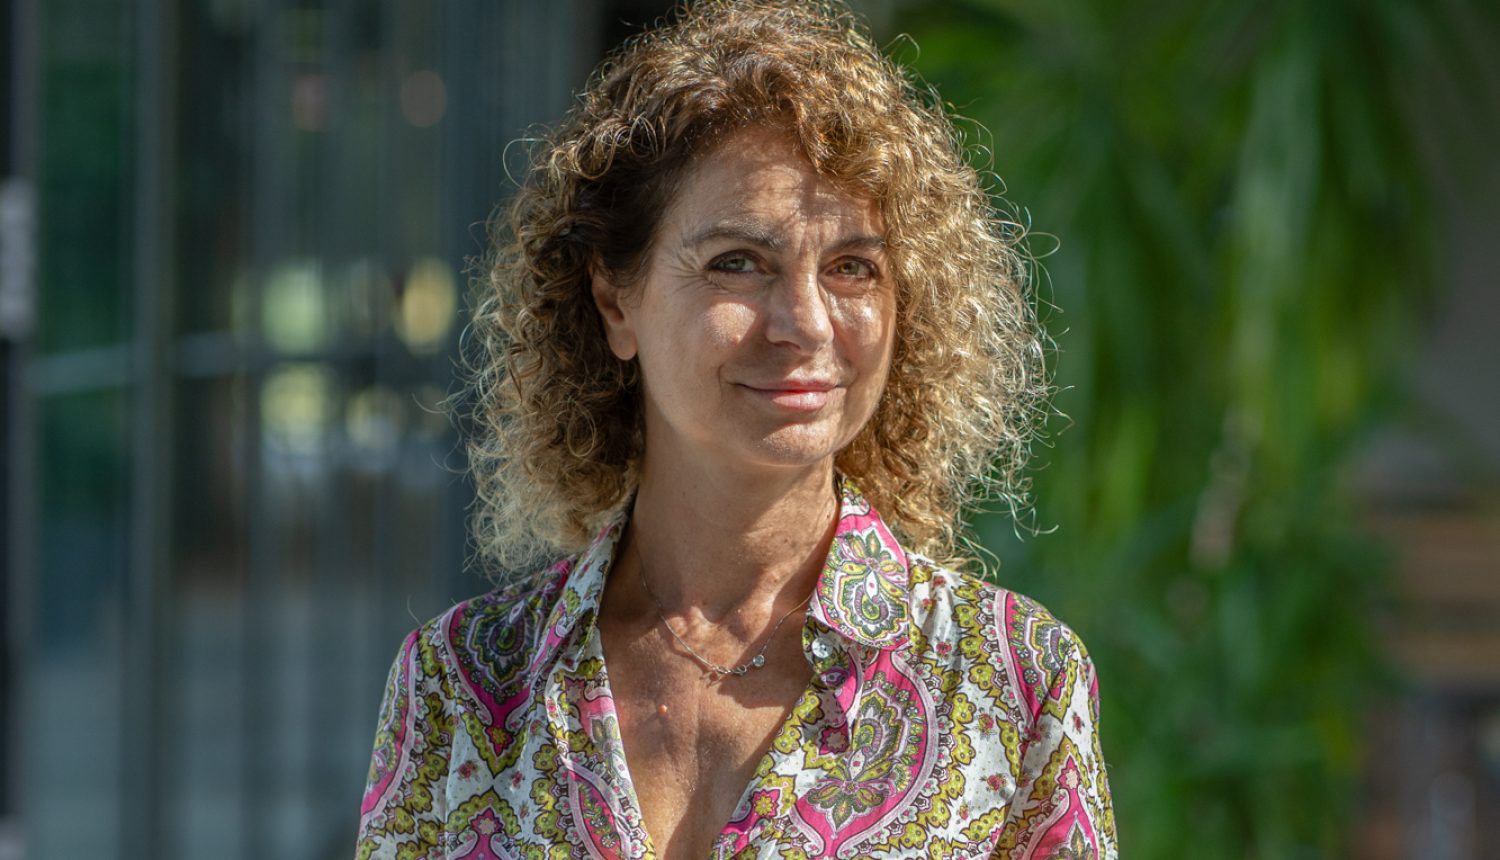 Alessandra Lomonaco